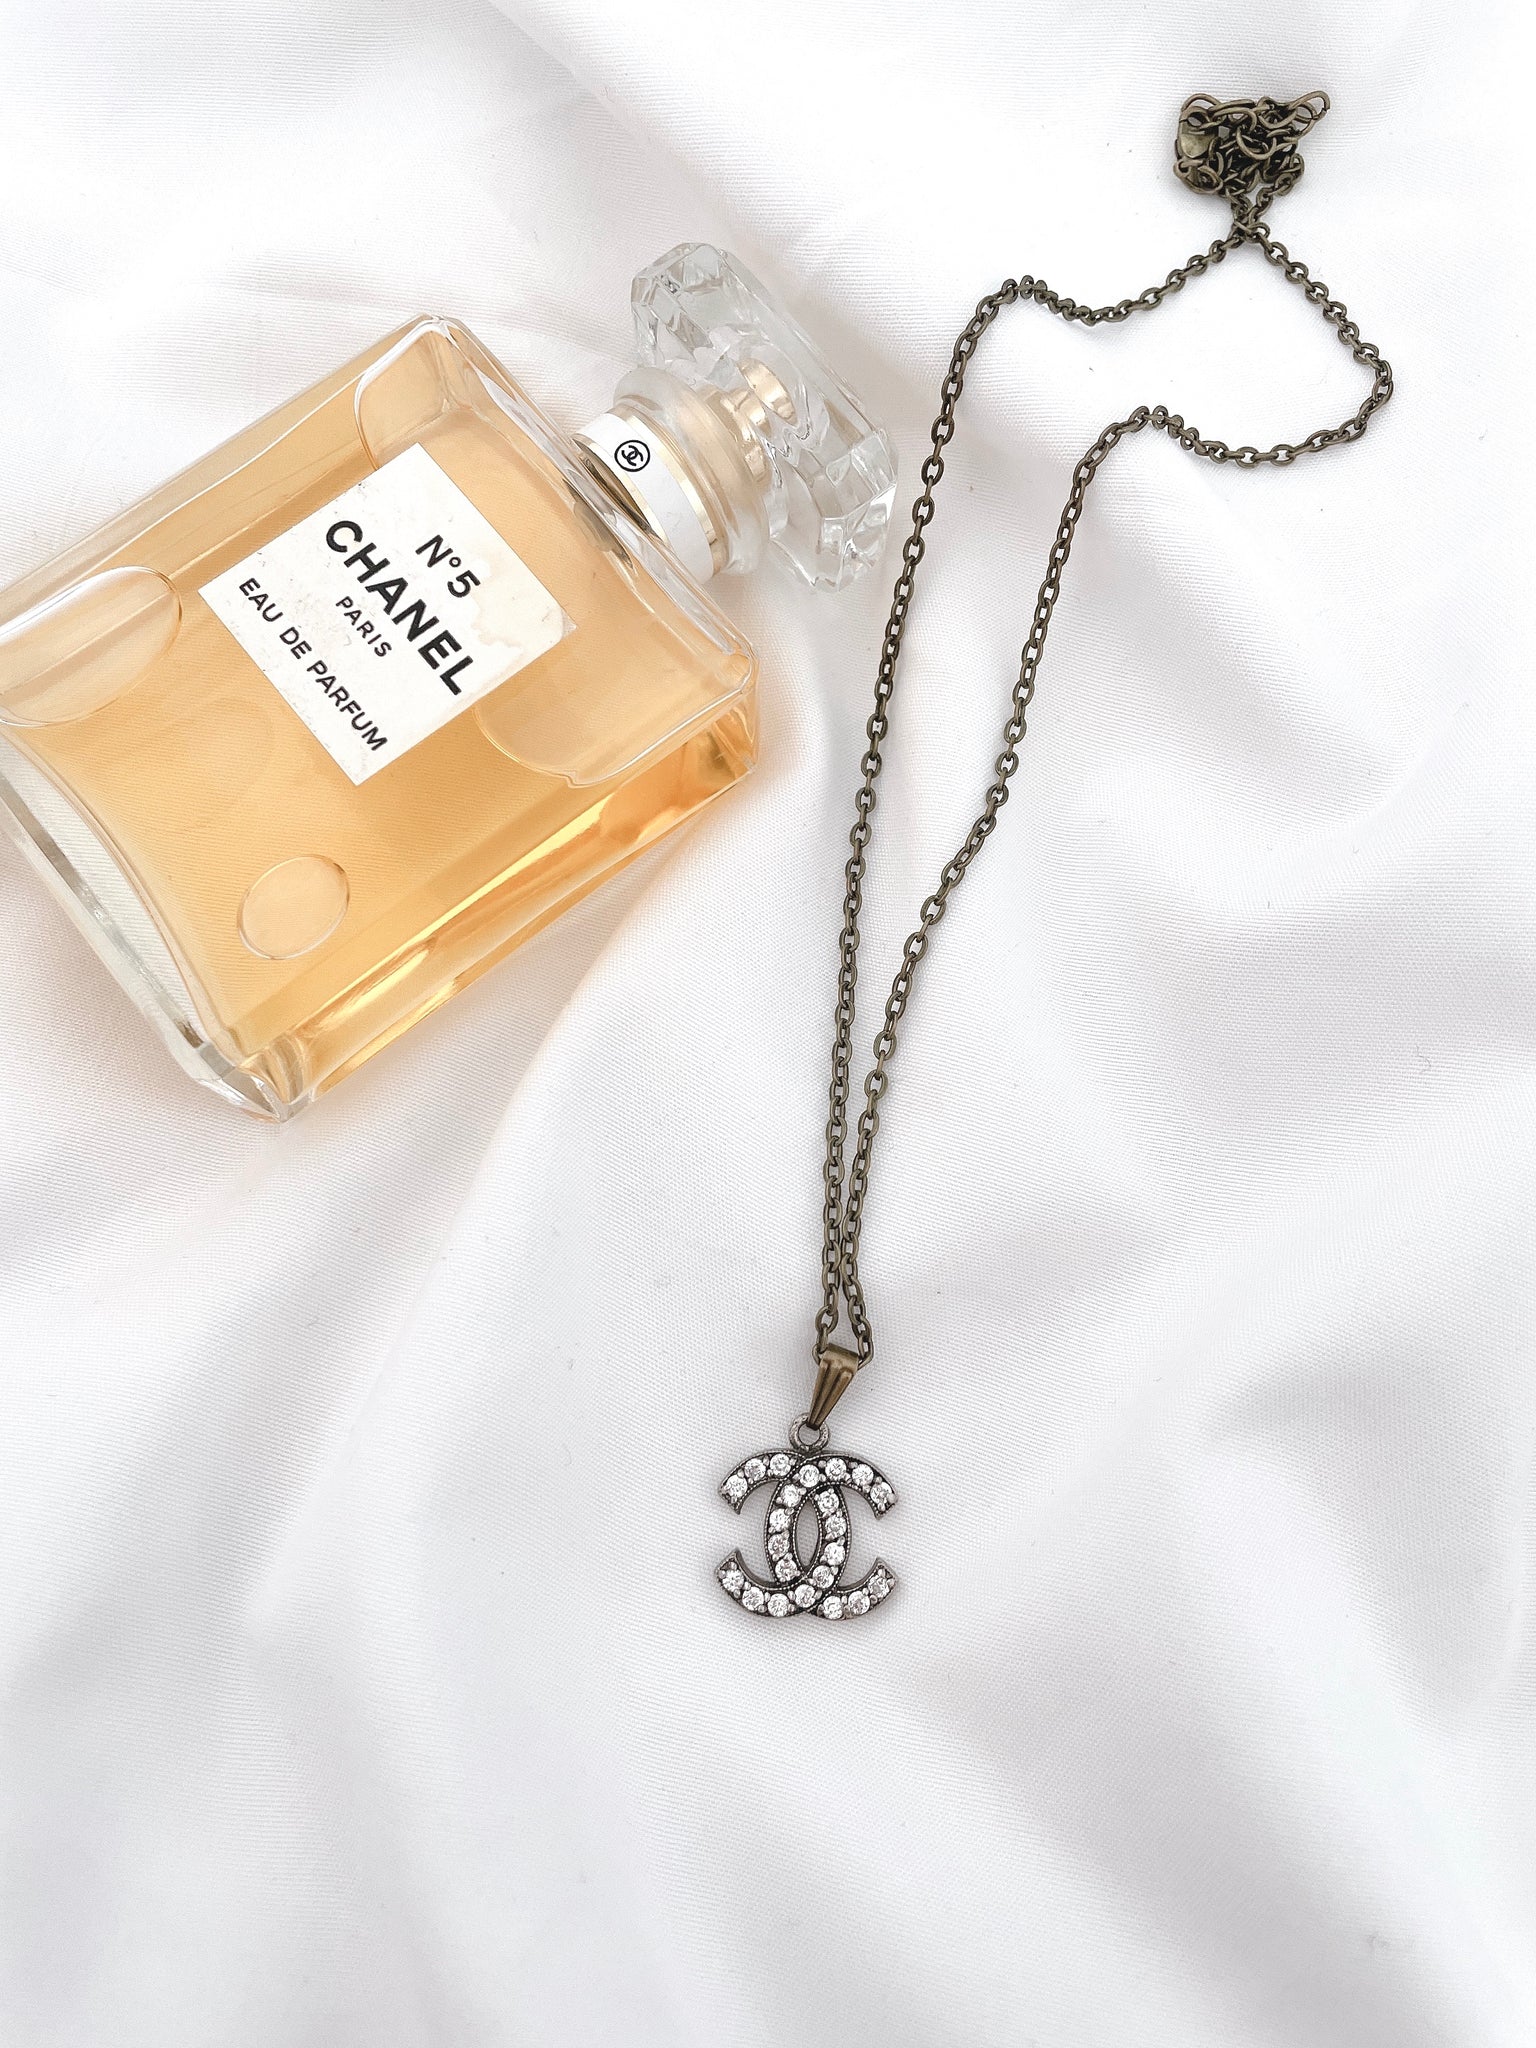 Chanel button 20 inch necklace, designer chic – True Rebel Clothing